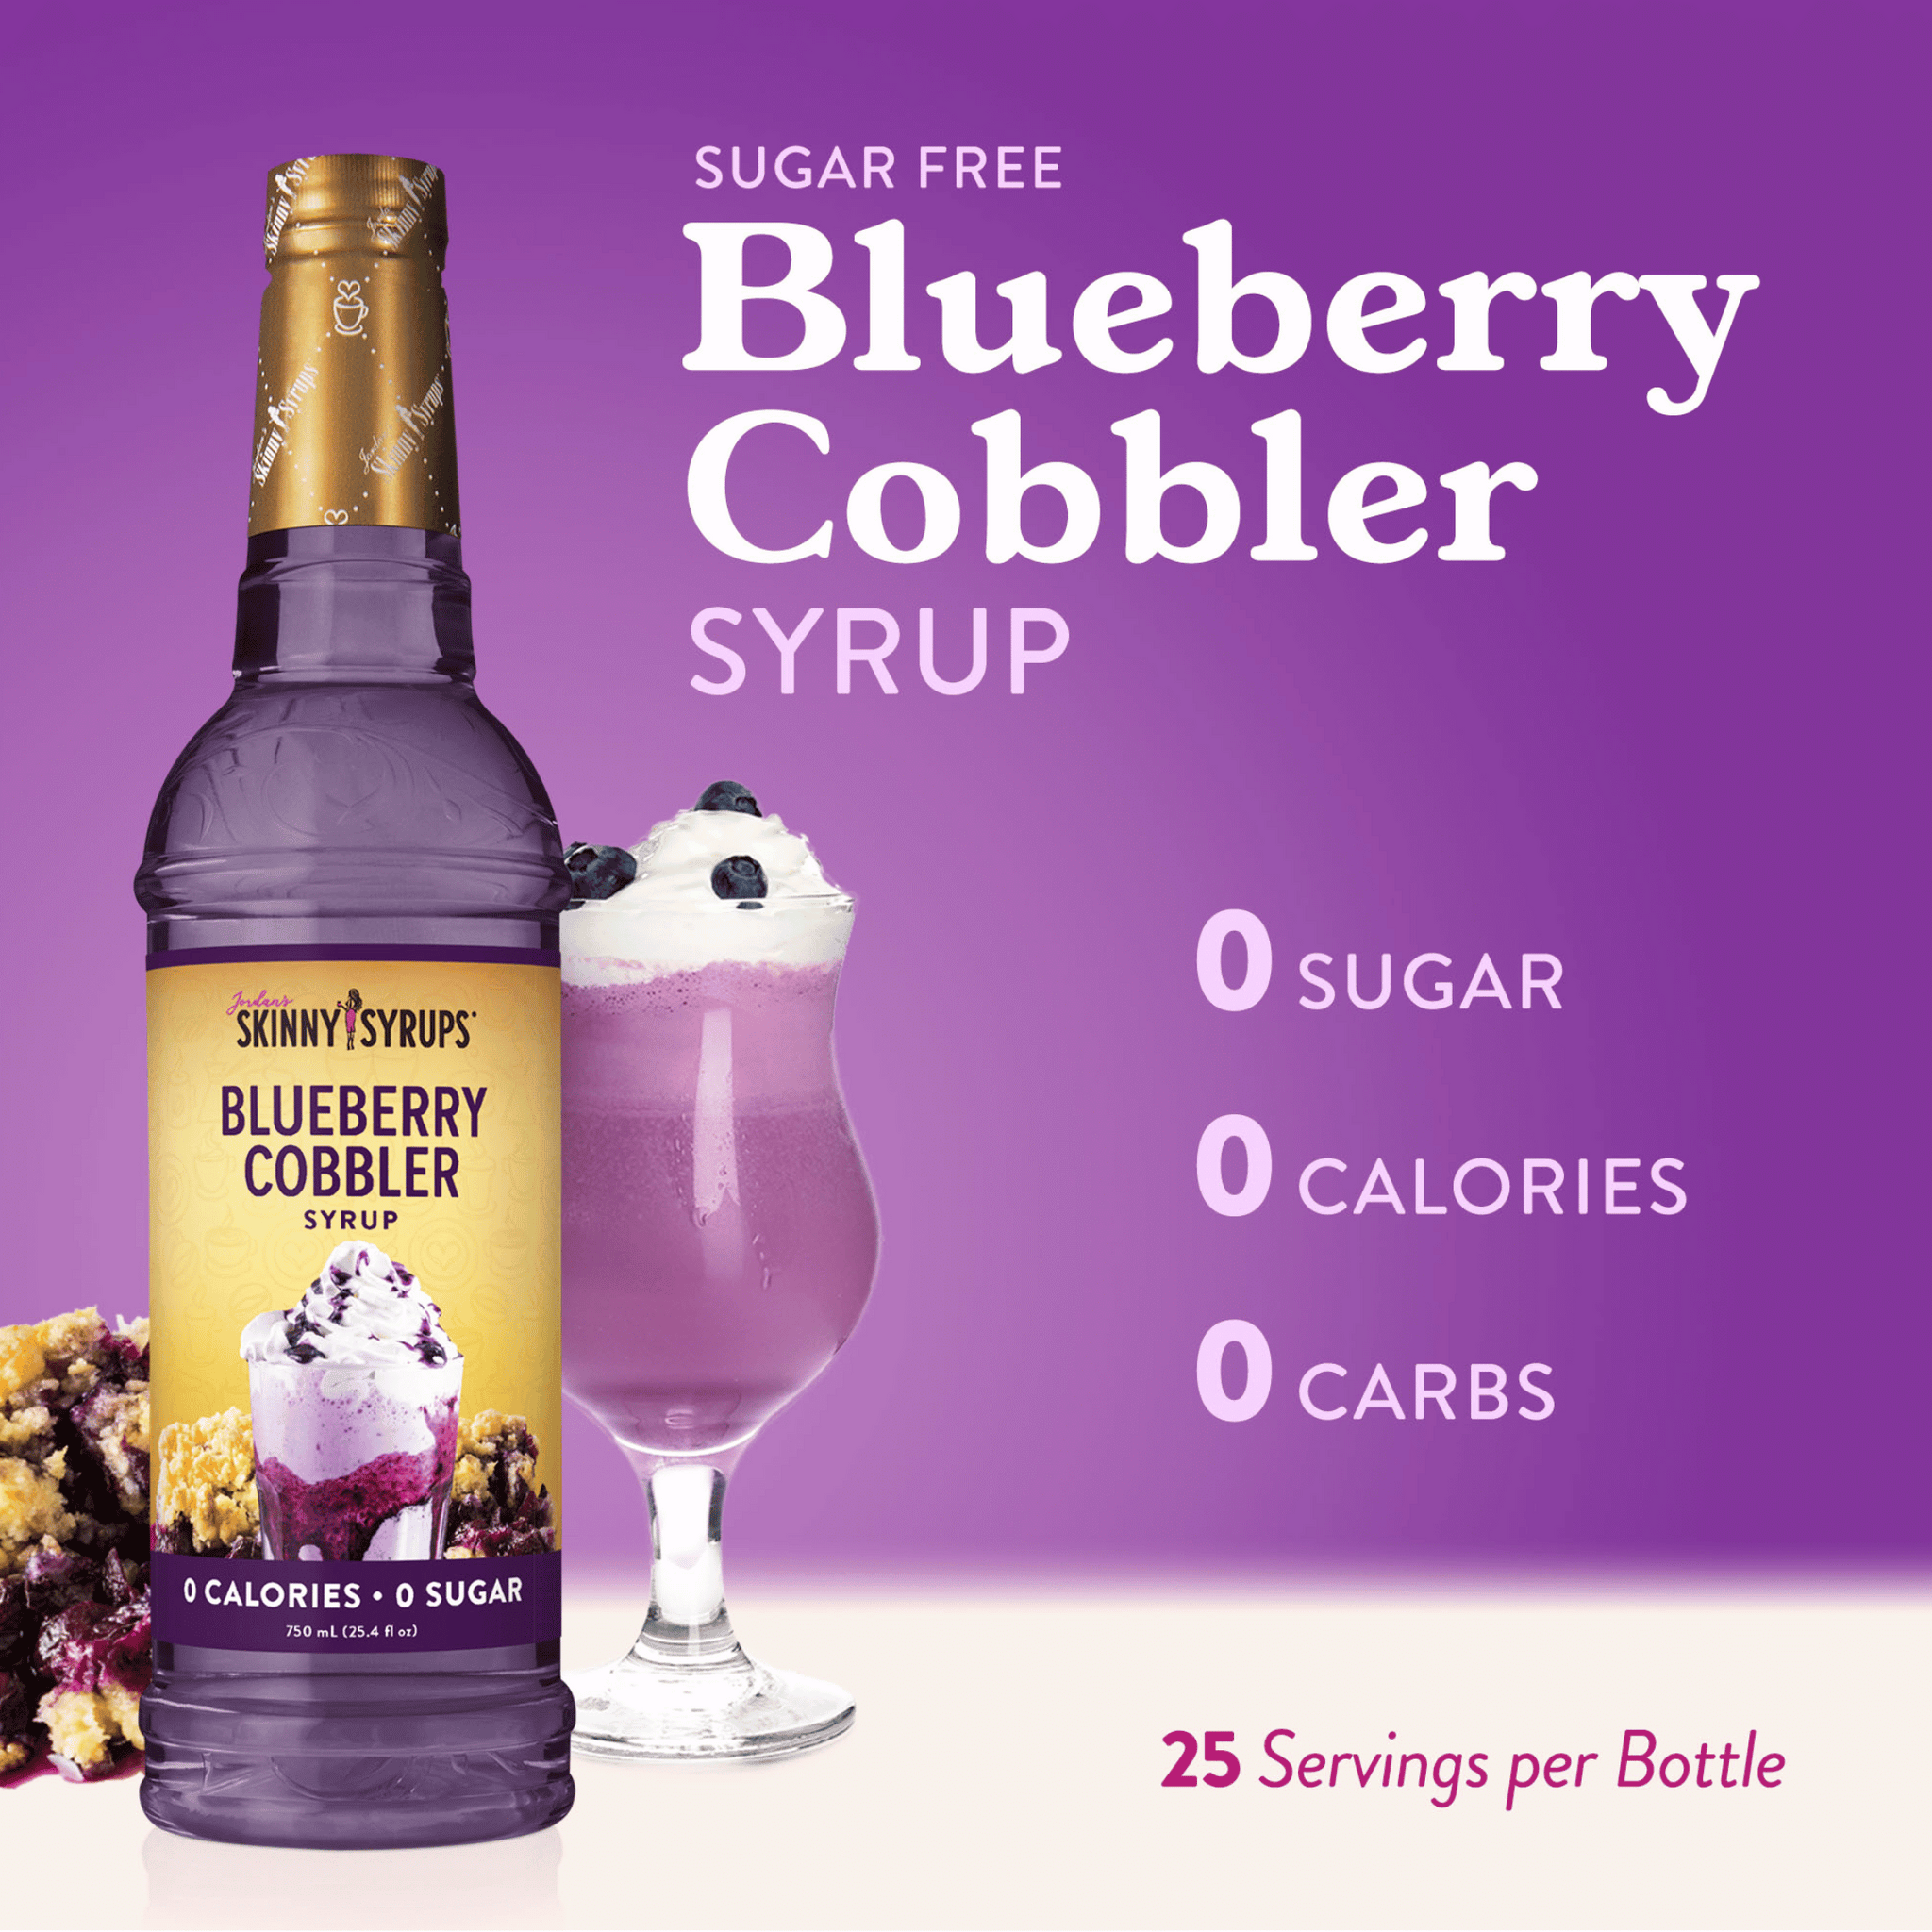 Sugar Free Blueberry Cobbler Syrup